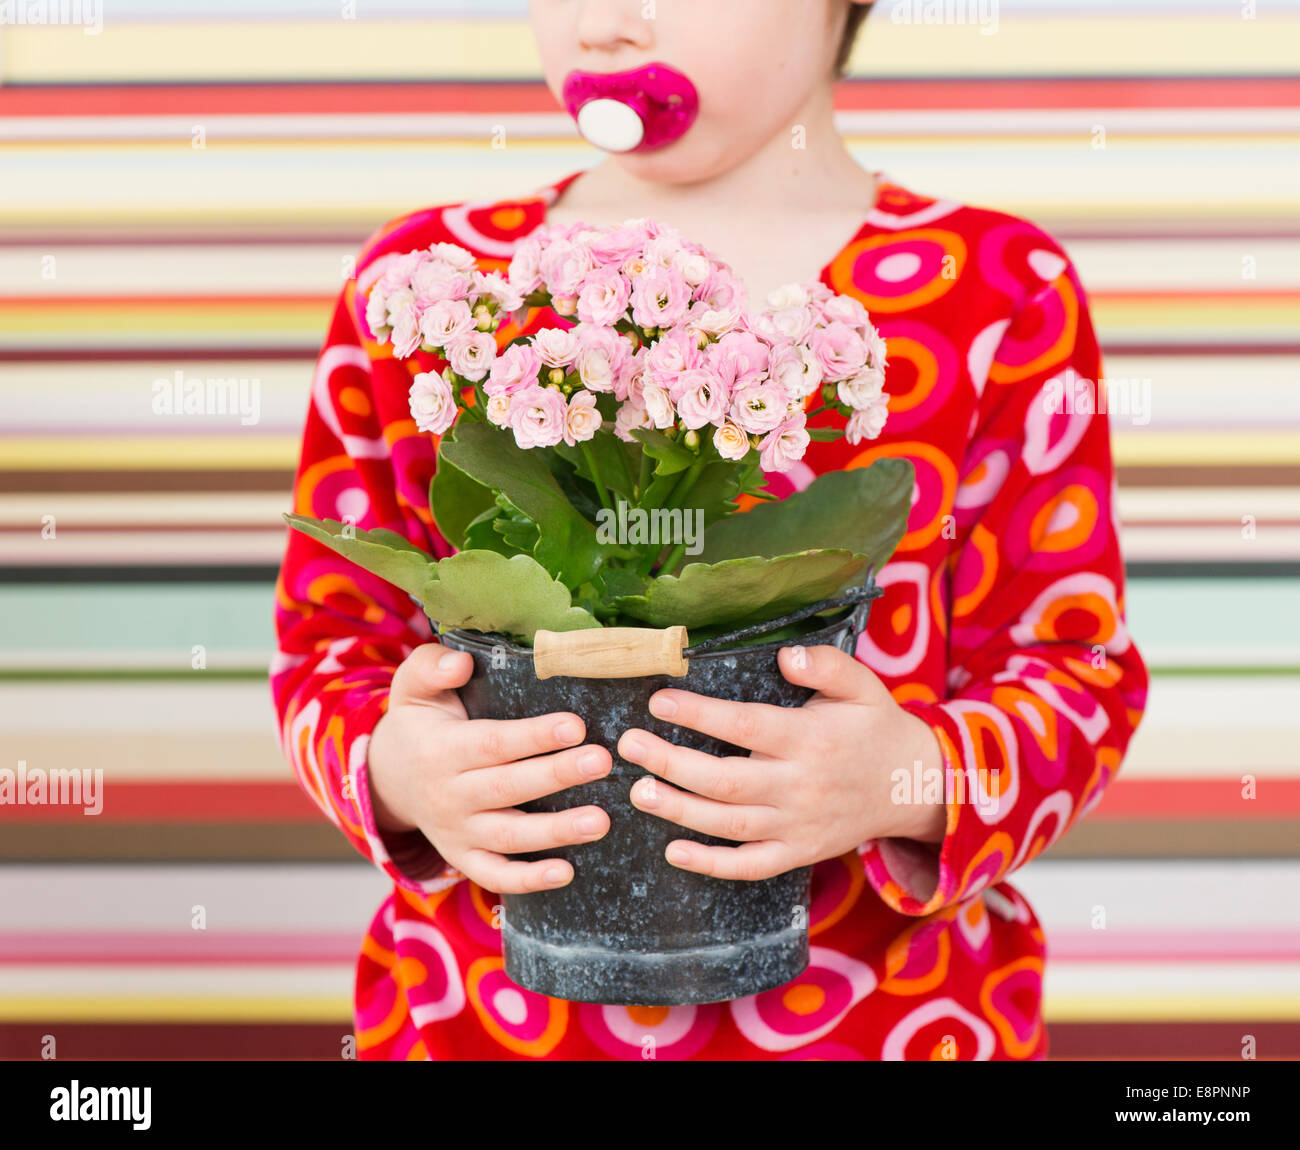 Little girl with red dress holding flower in flowerpot Stock Photo